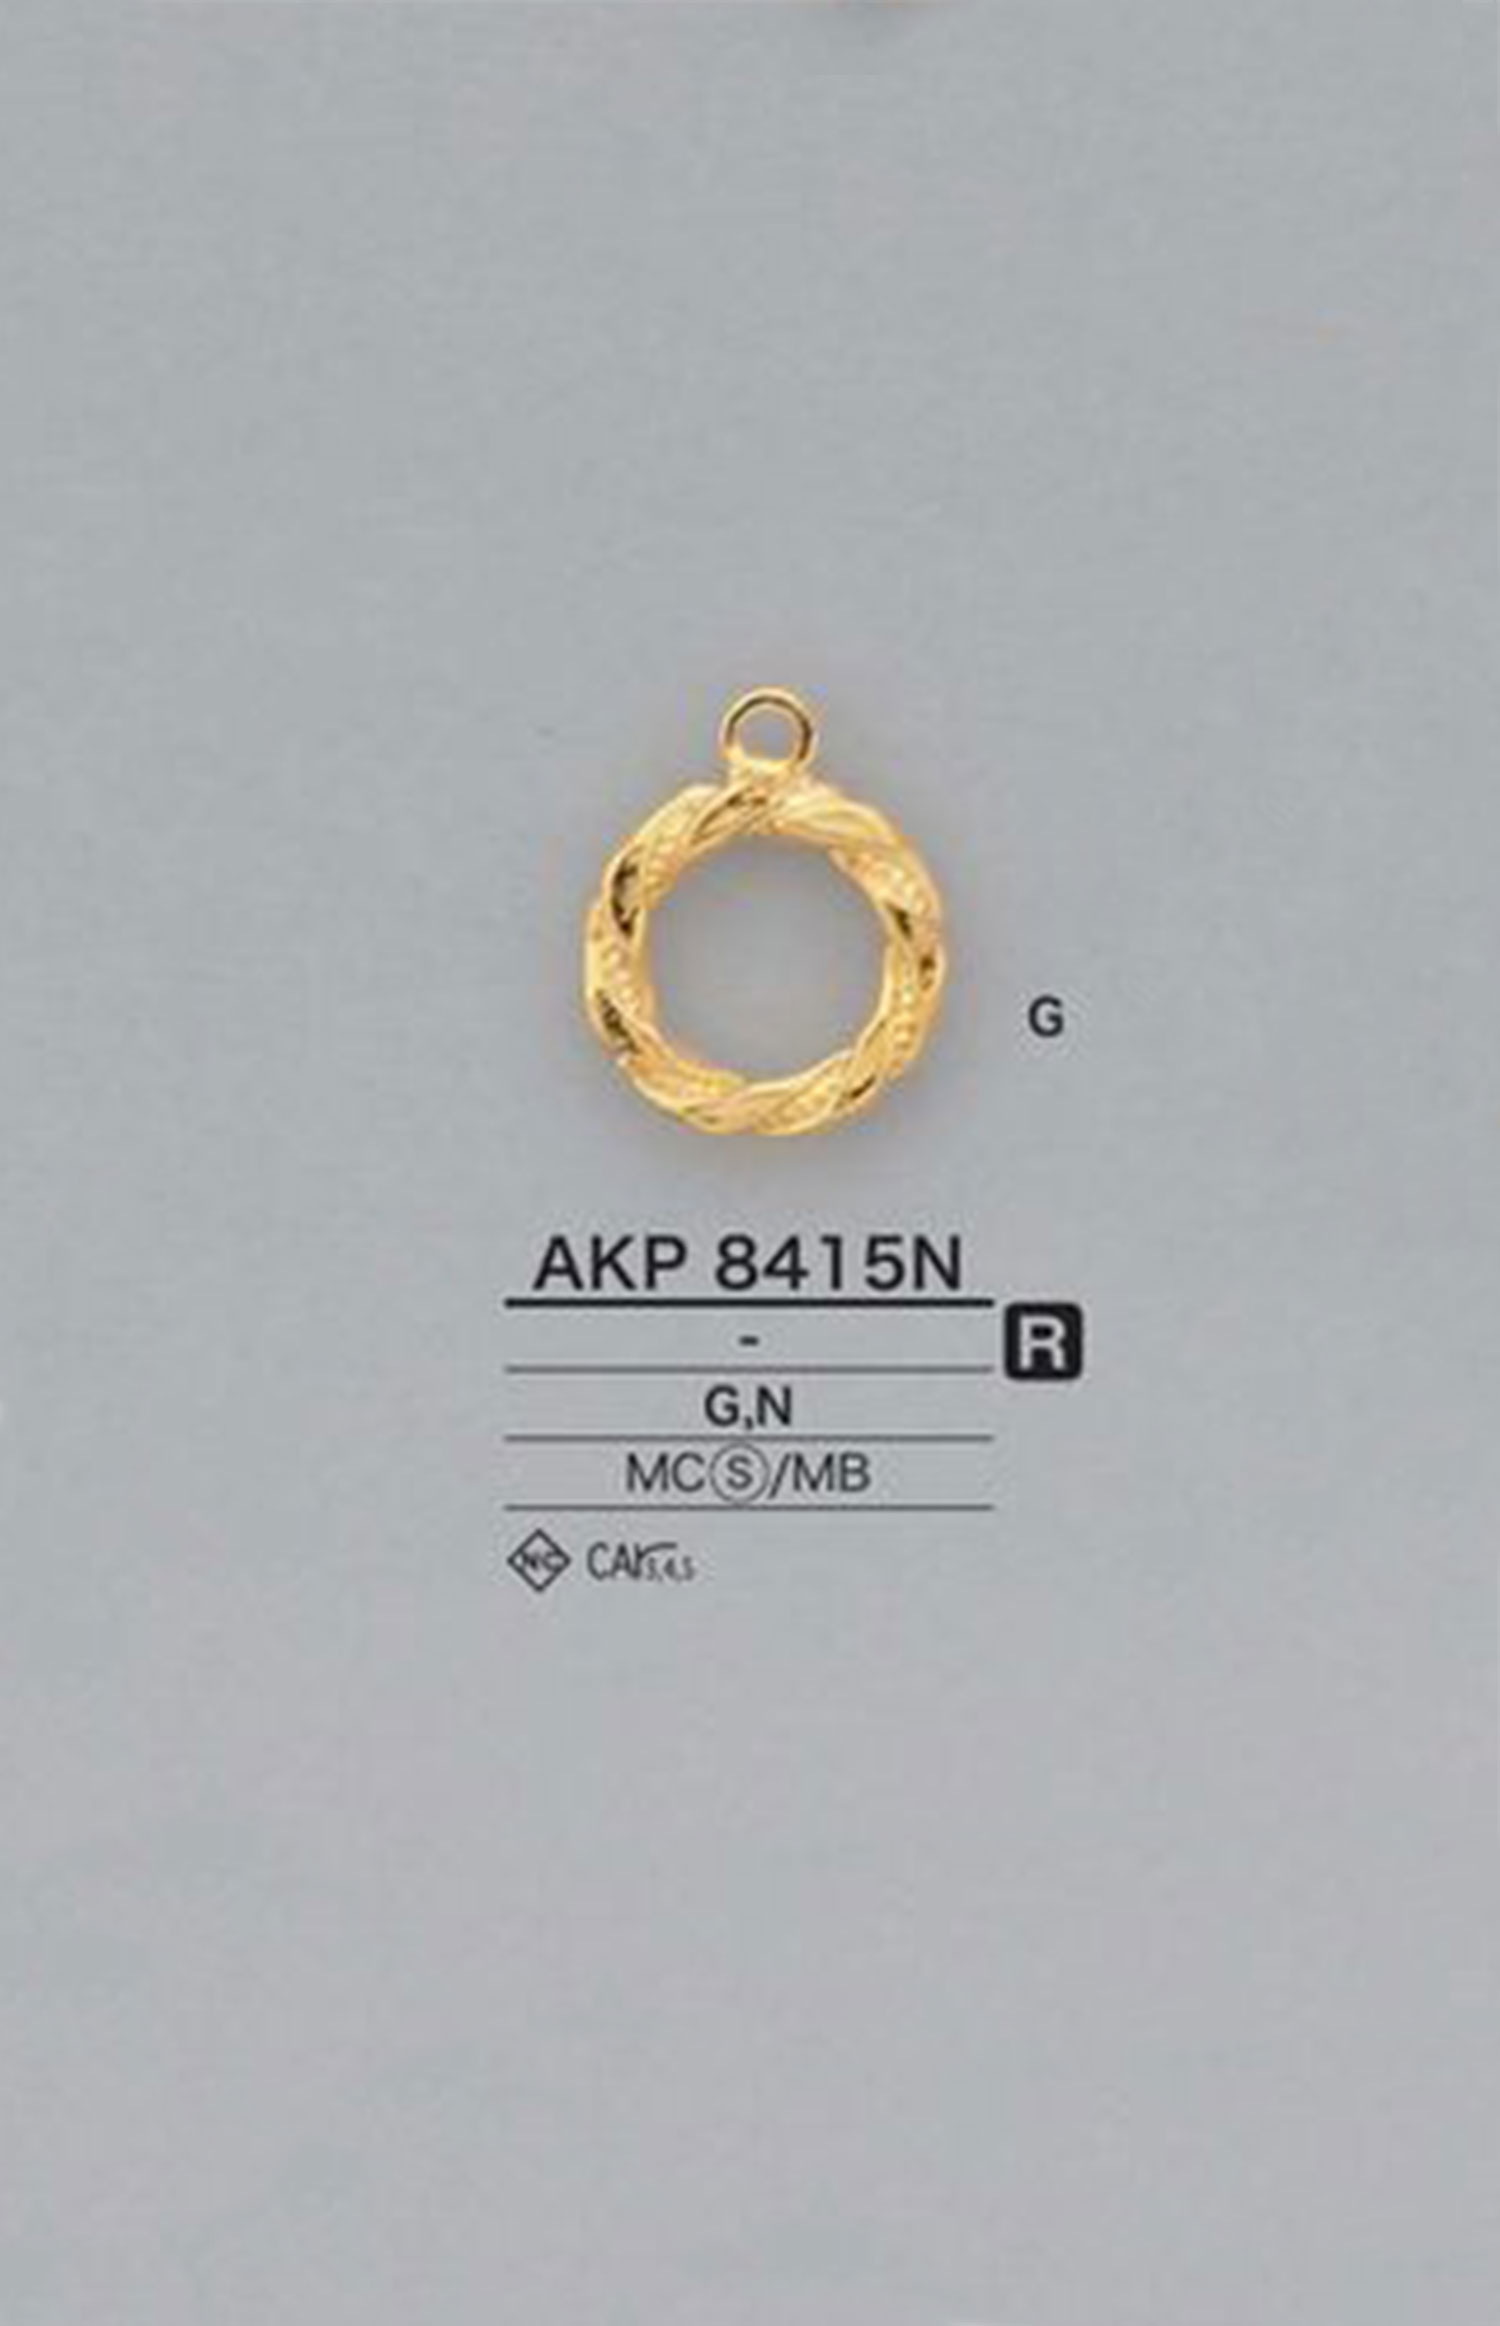 AKP8415N 环点（拉链拉头） 爱丽丝纽扣